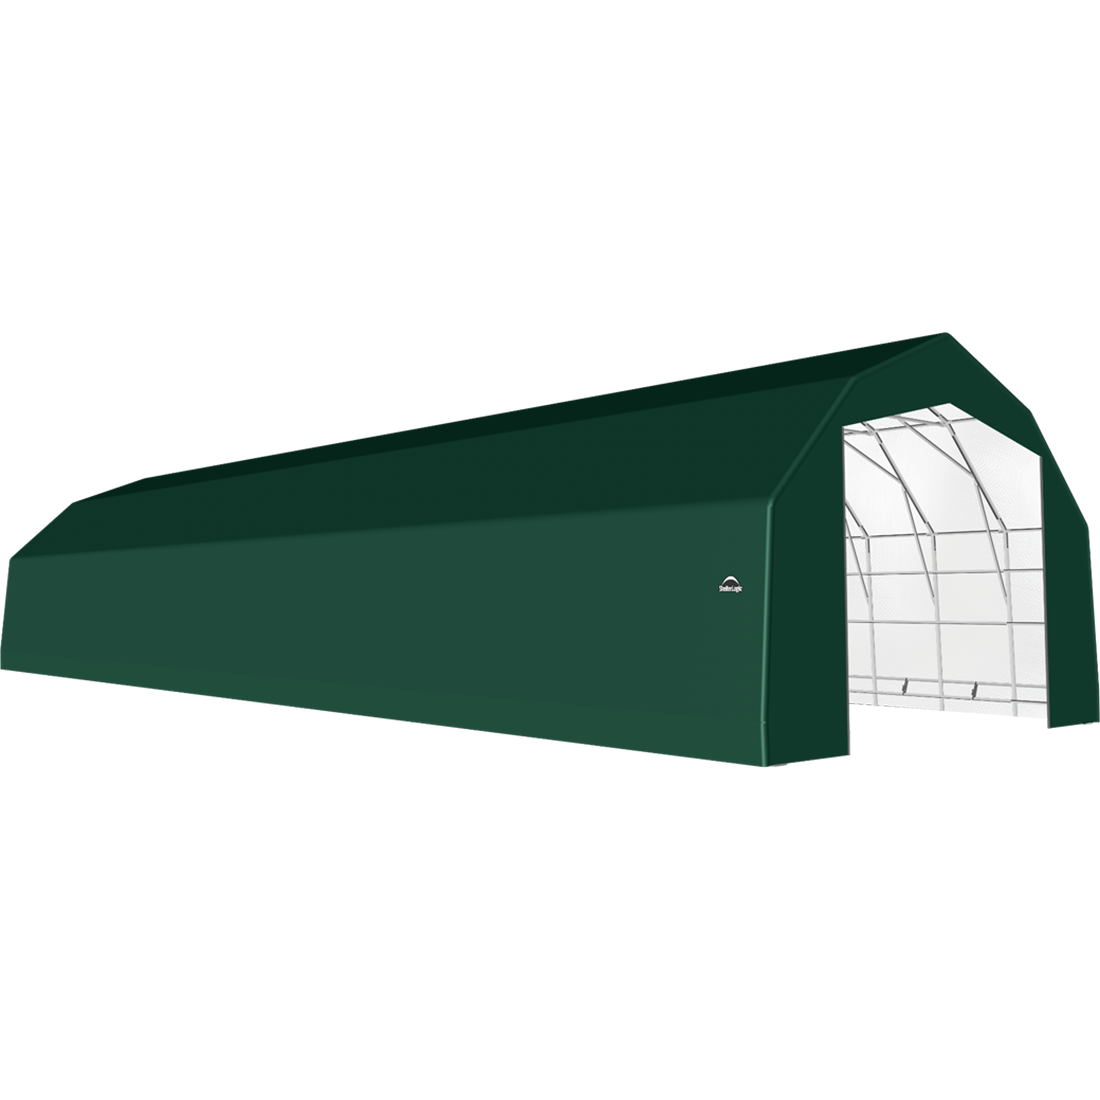 ShelterTech SP Series Barn Shelter, 25 ft. x 84 ft. x 17 ft. Heavy Duty PVC 14.5 oz. Green